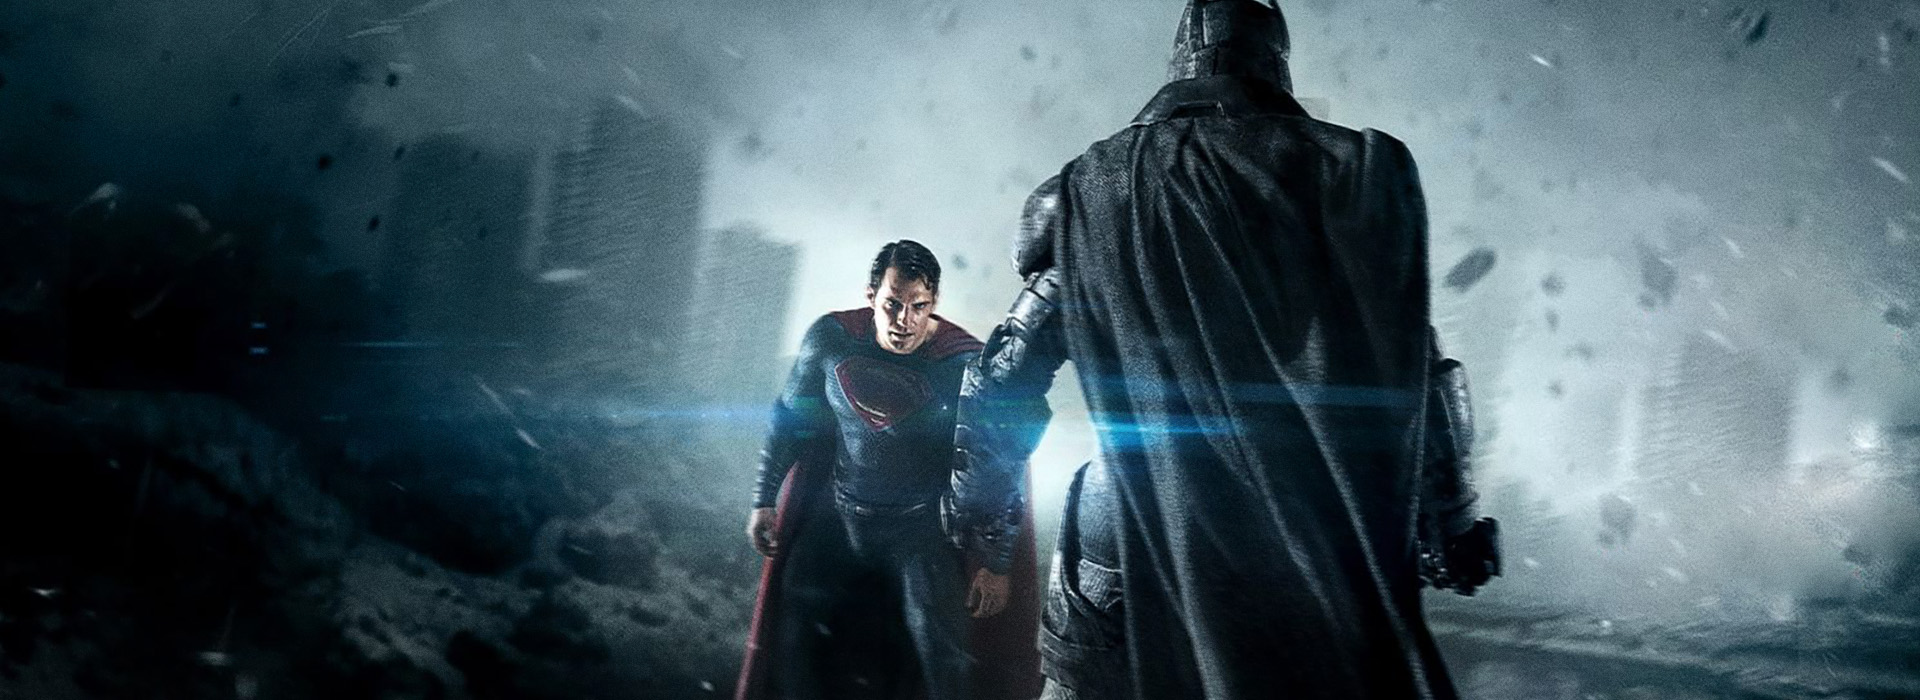 Movie poster Batman v Superman: Dawn of Justice